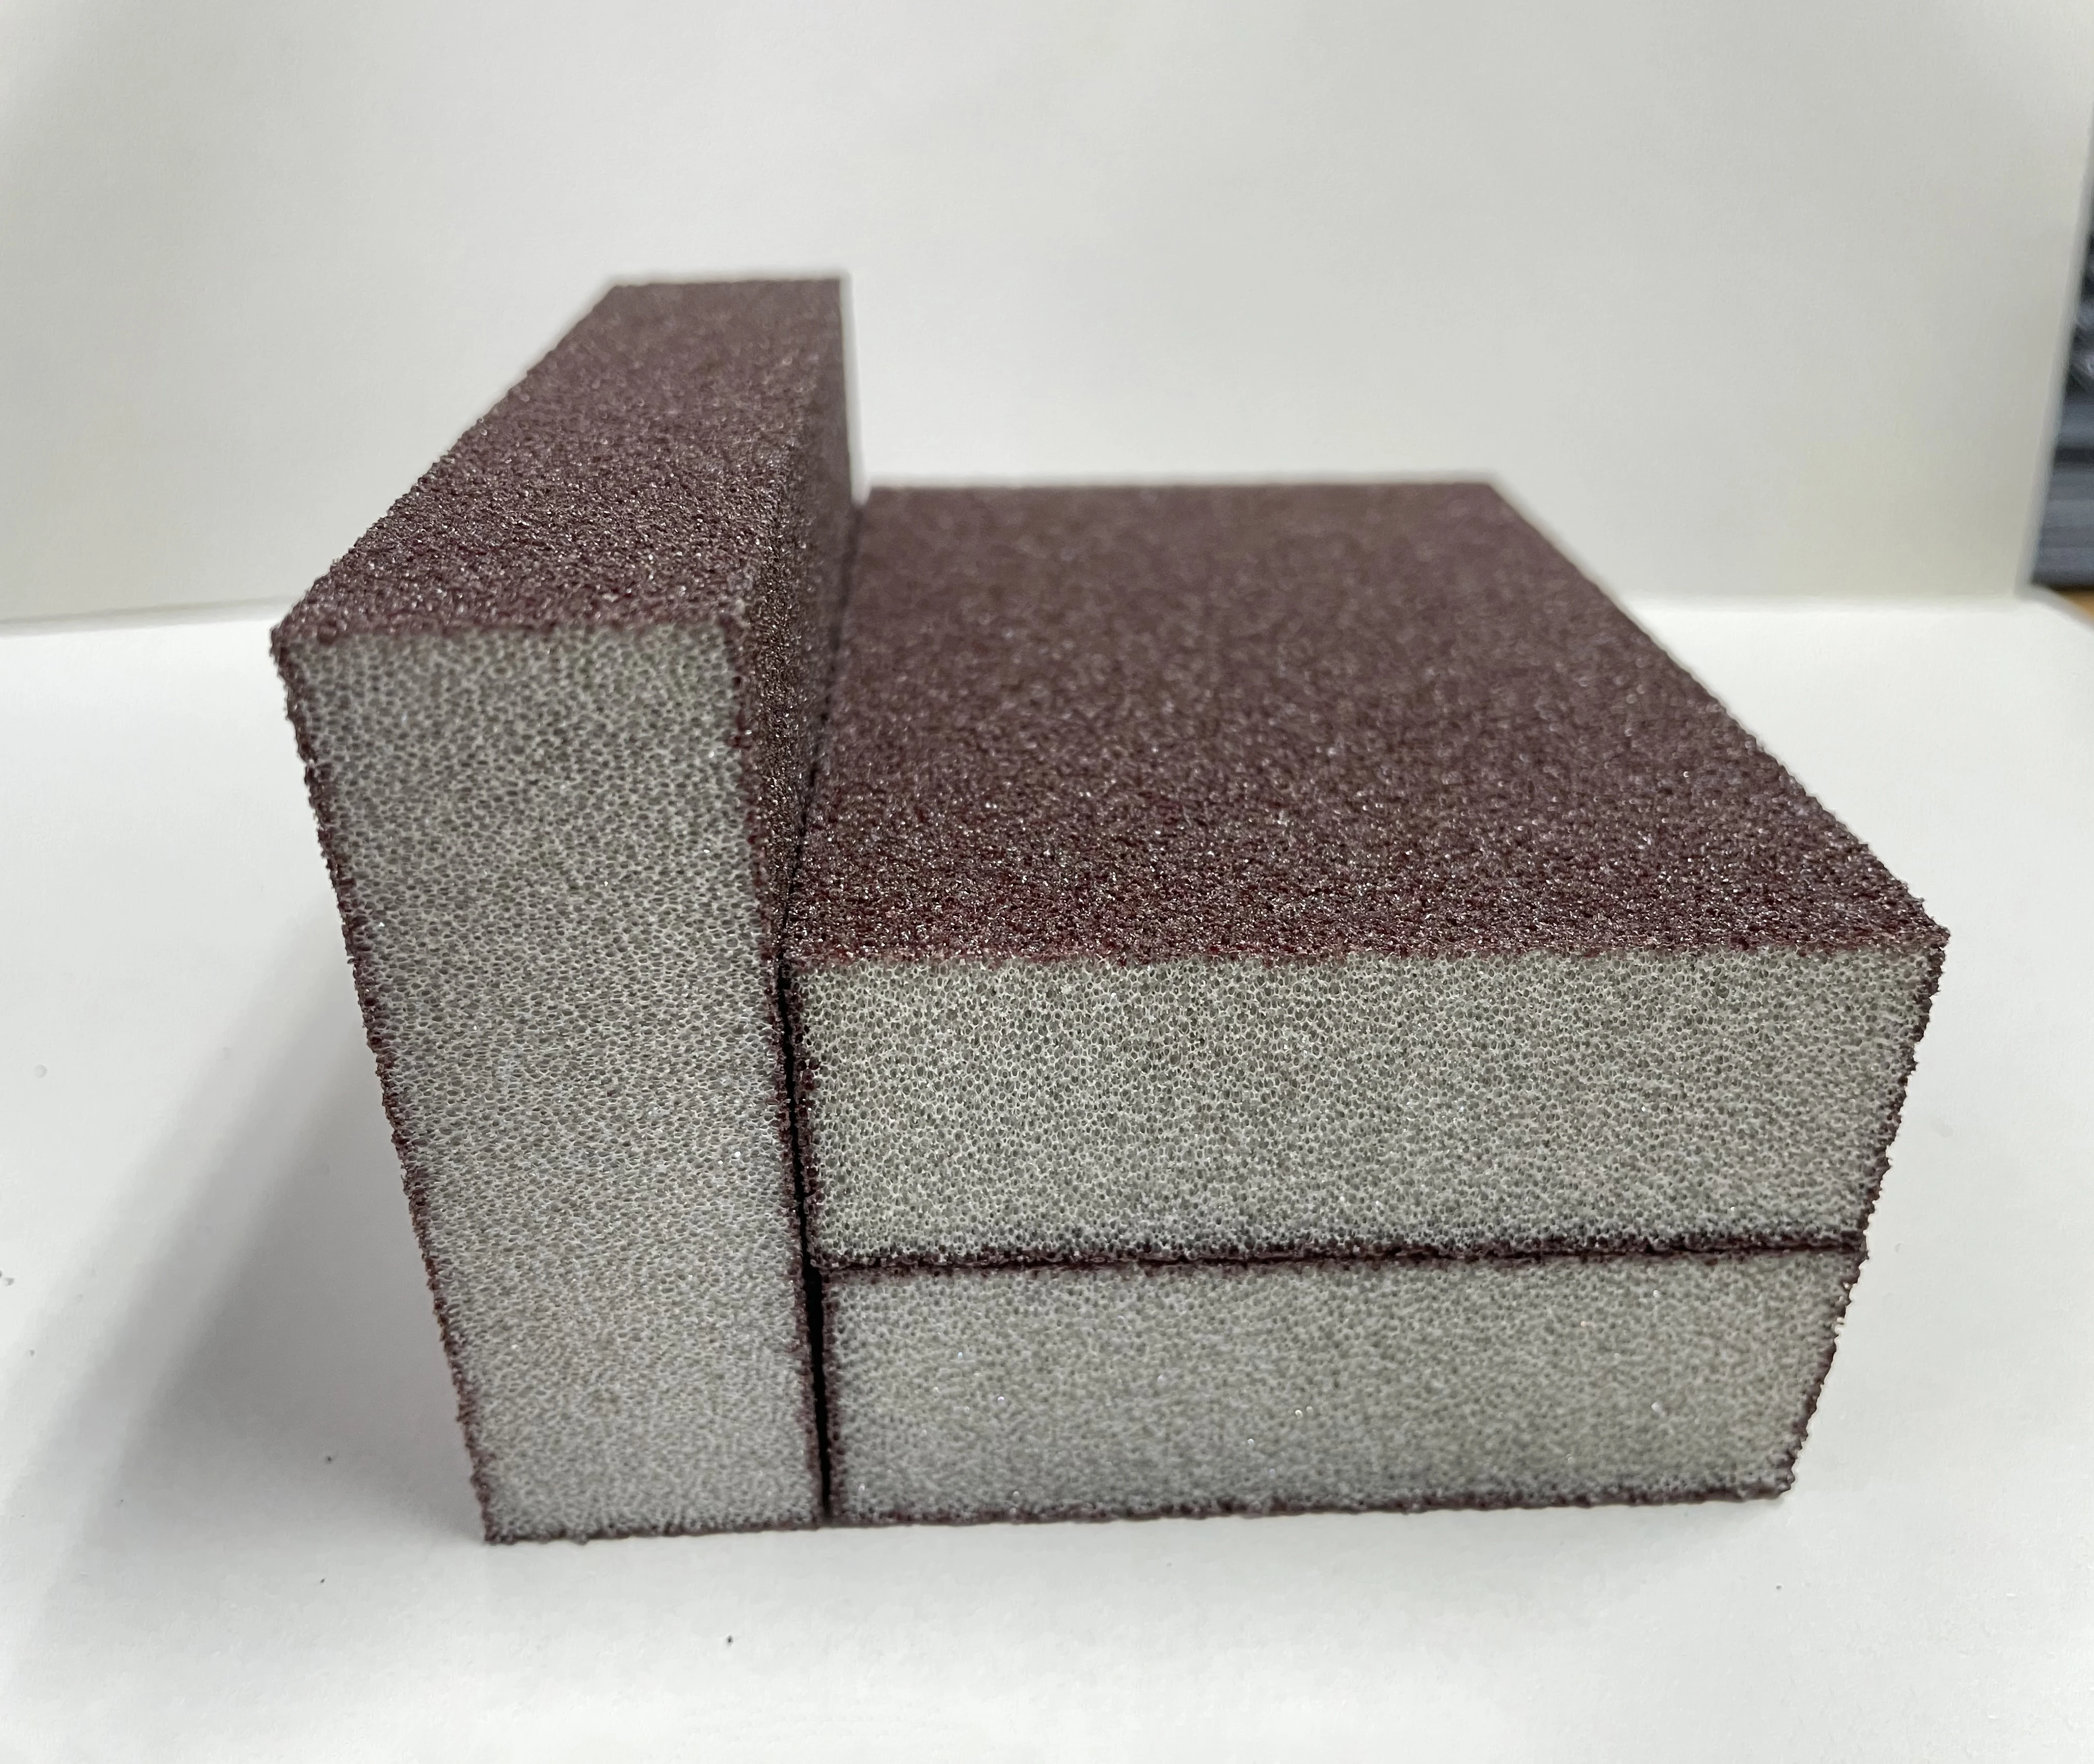 Trapezoid sanding sponge block